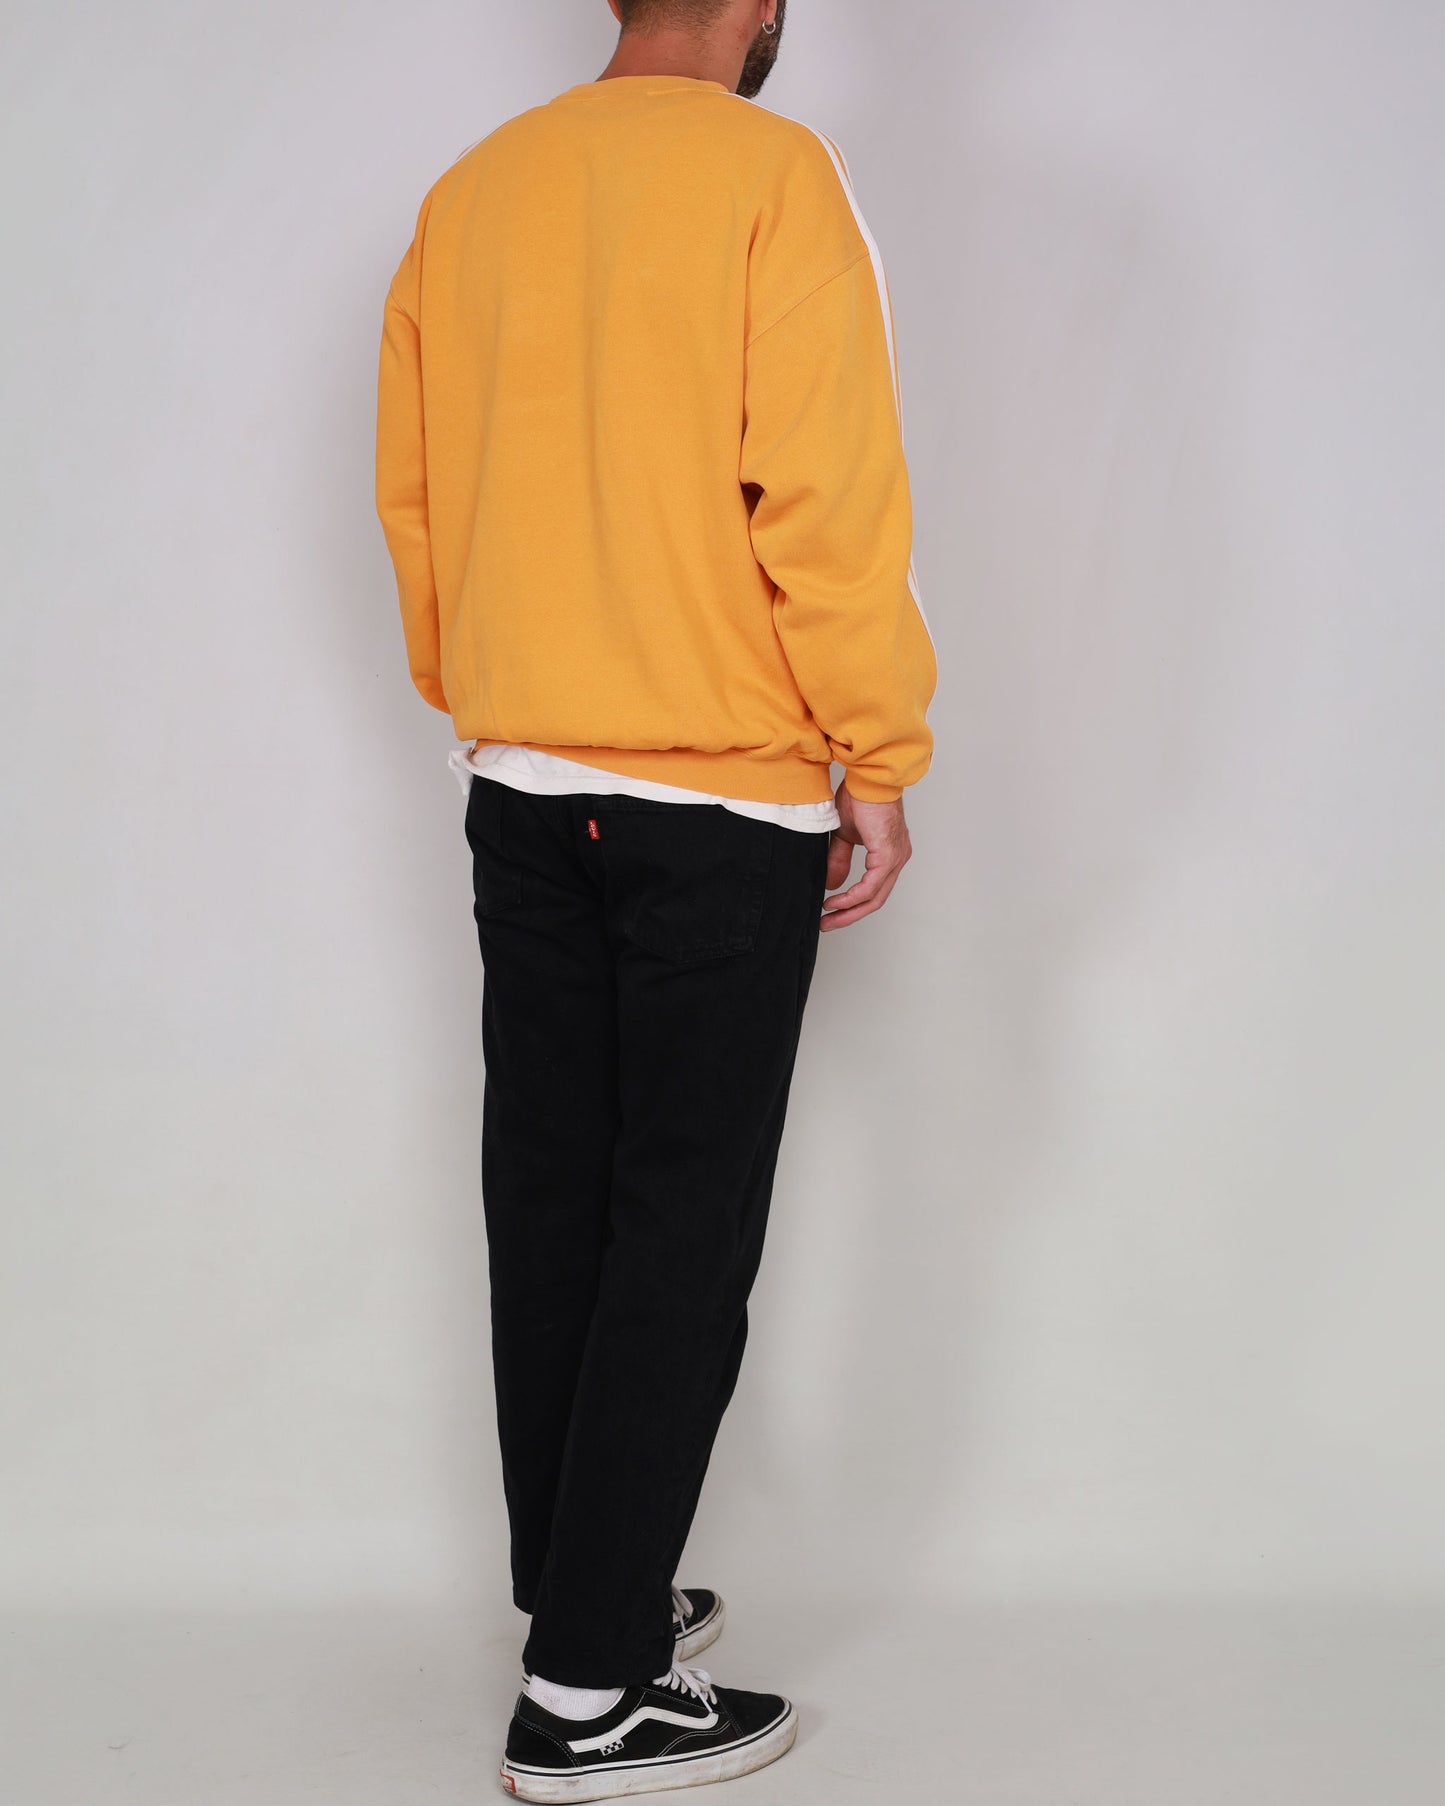 Adidas Crewneck Sweatshirt Yellow Ochre L